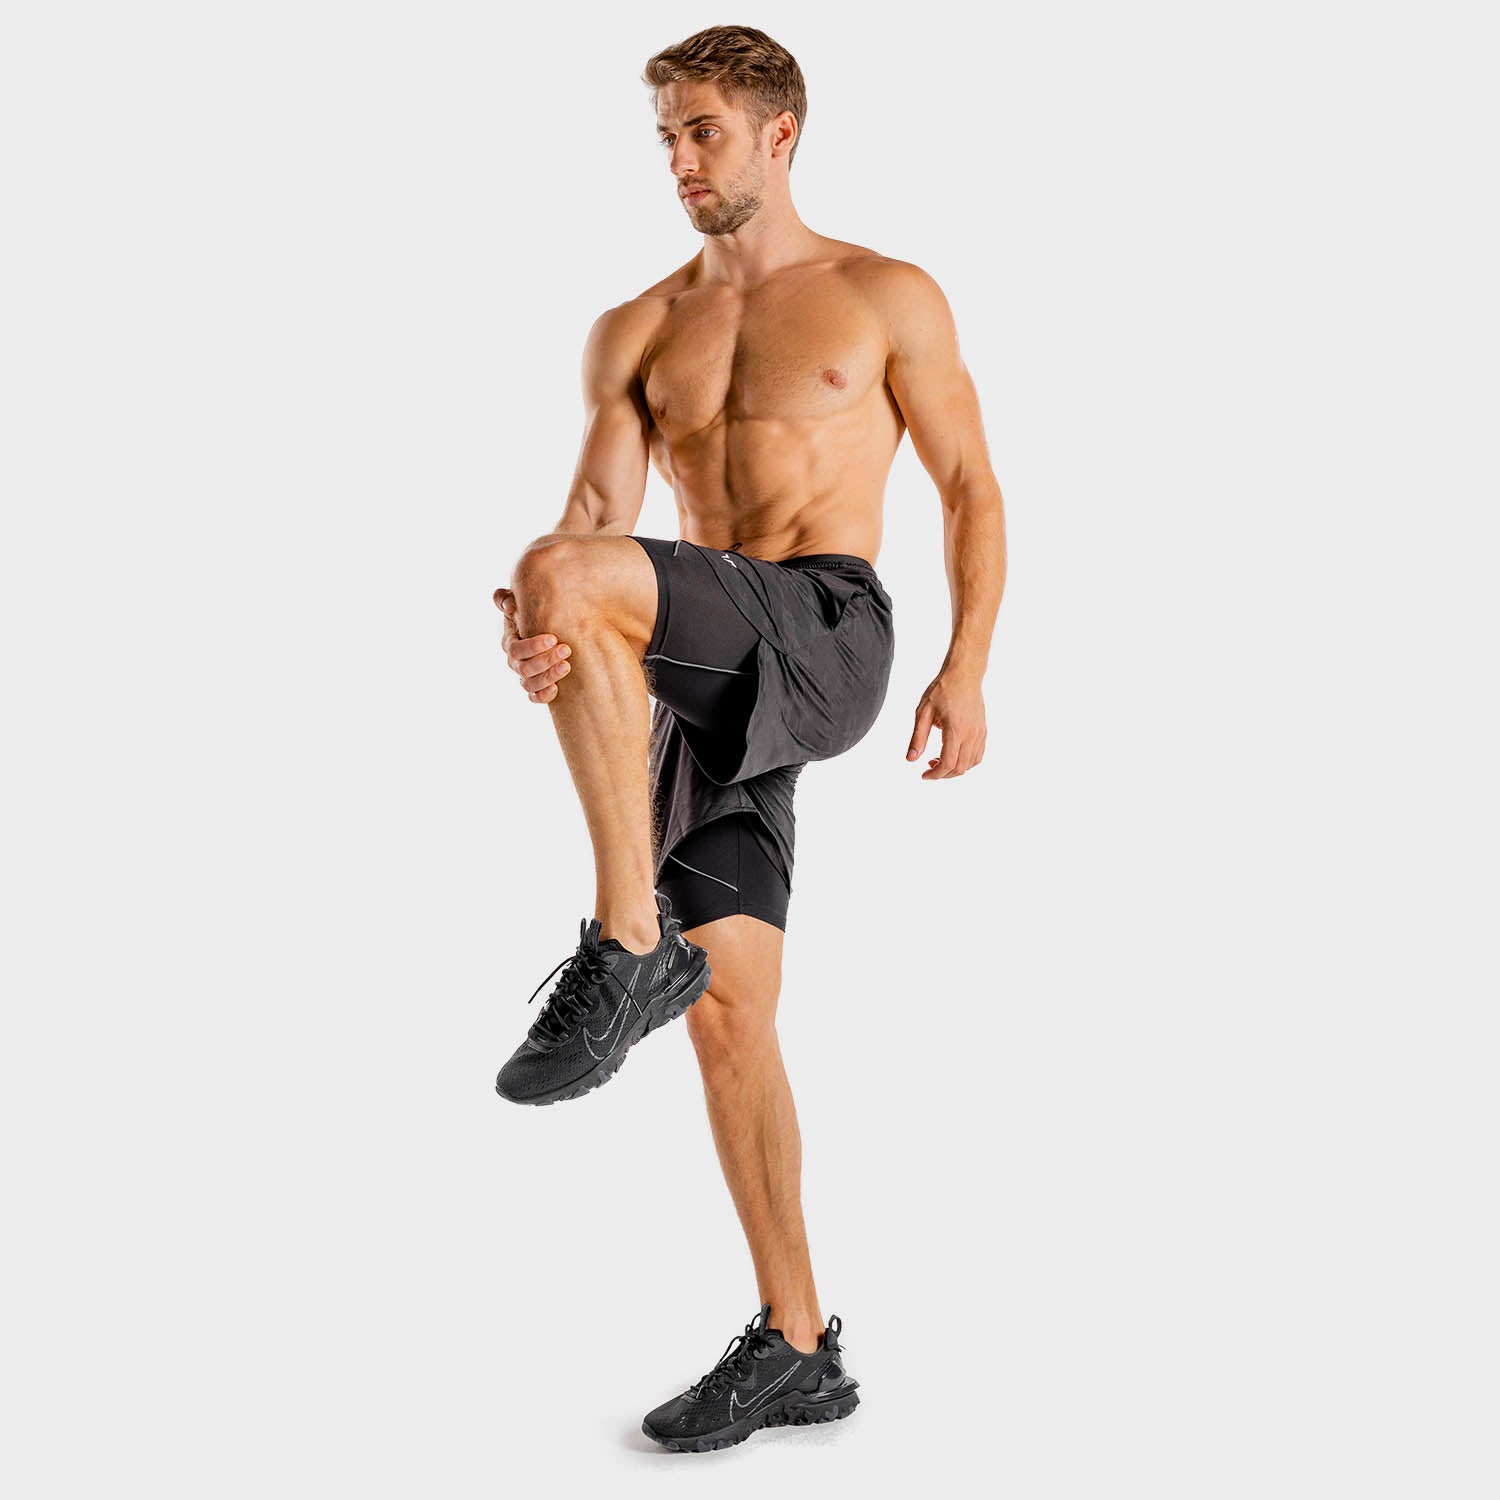 squatwolf-workout-short-for-men-wolf-compression-shorts-black-gym-wear